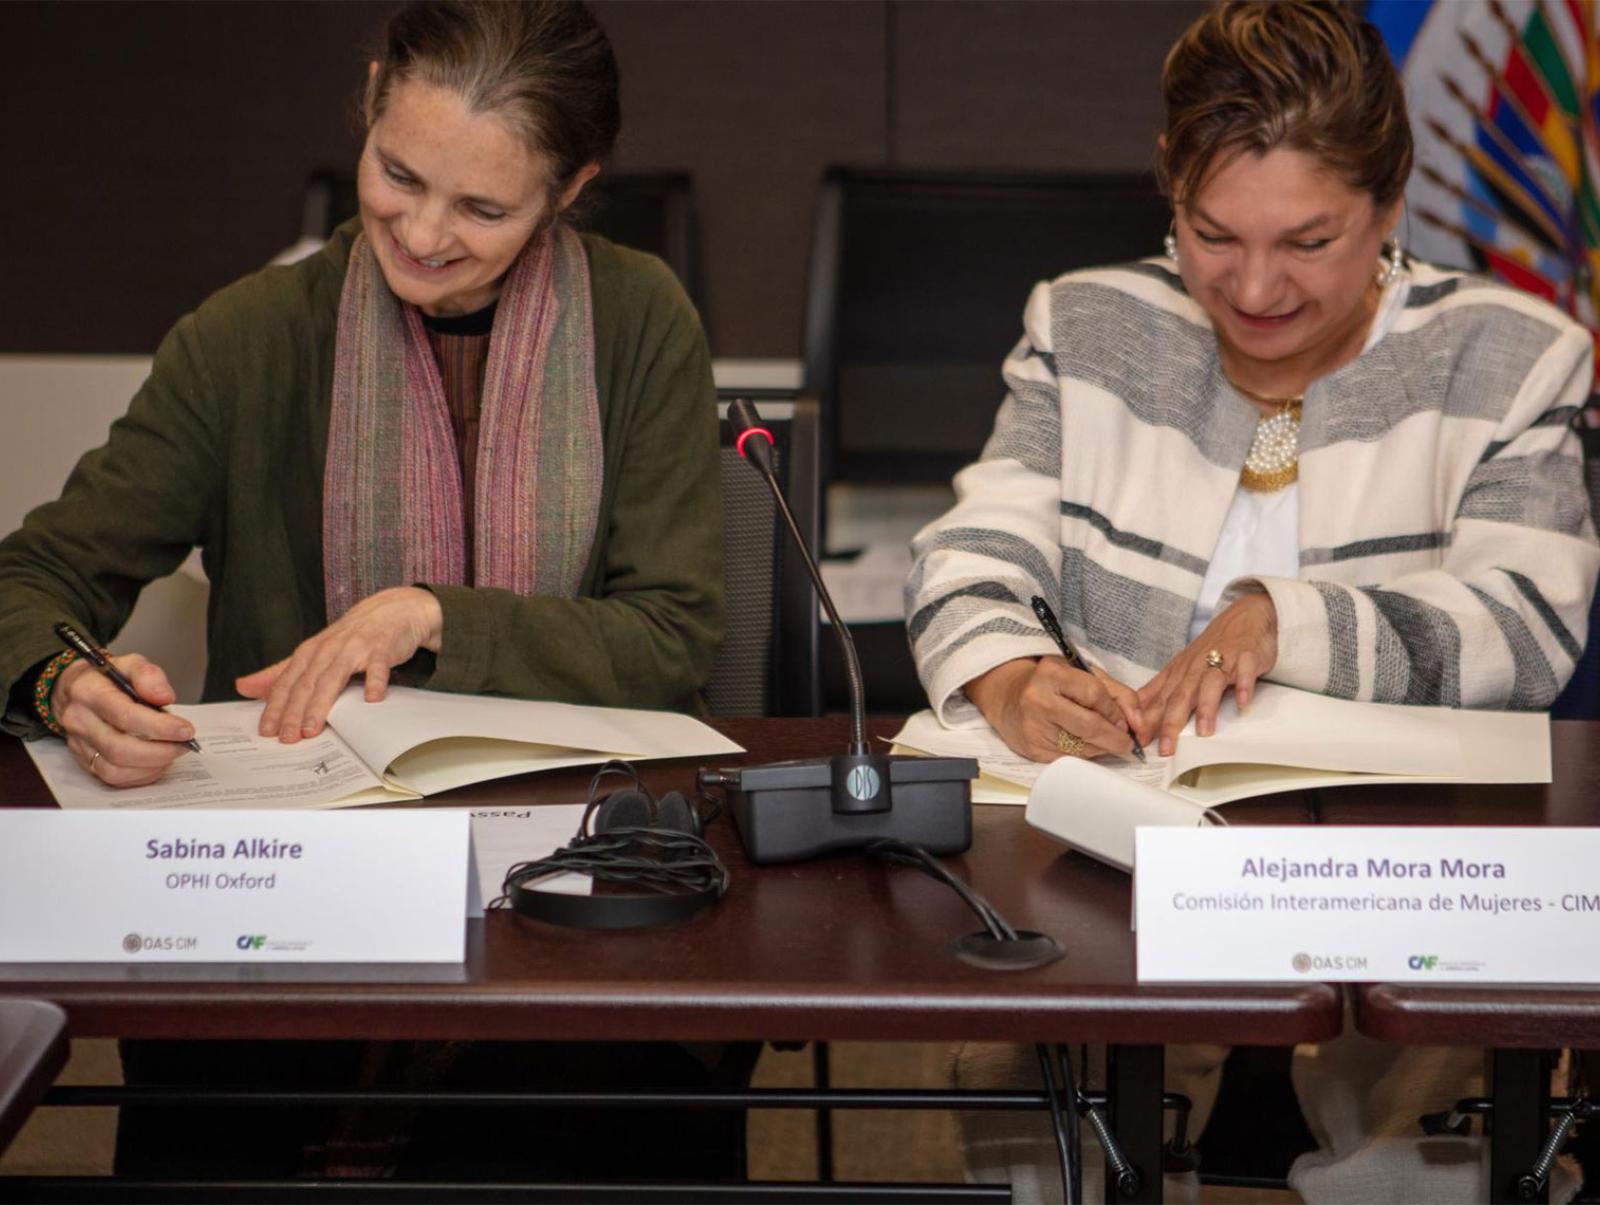 Sabina Alkire and Alejandra Mora Mora seated at a desk signing agreements